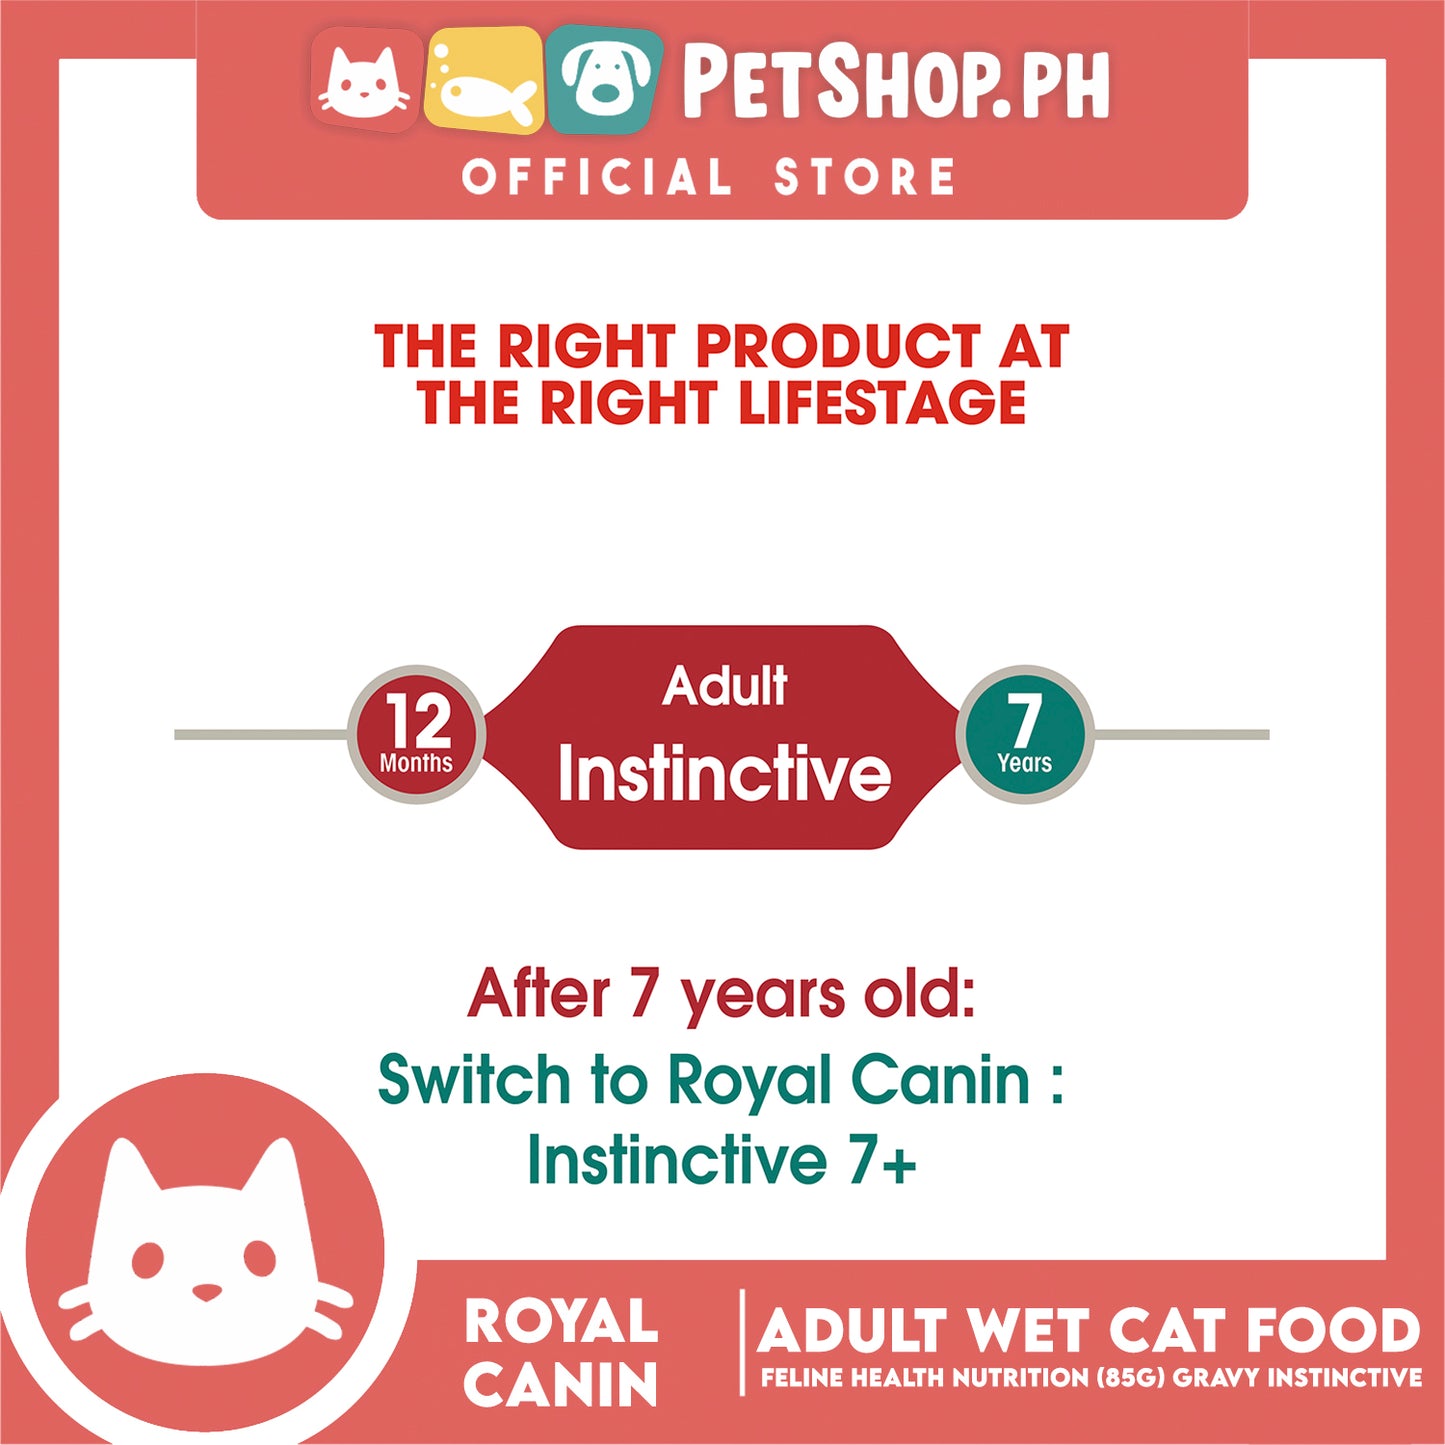 Royal Canin Instinctive Gravy (85g) Adult Wet Cat Food - Feline Health Nutrition